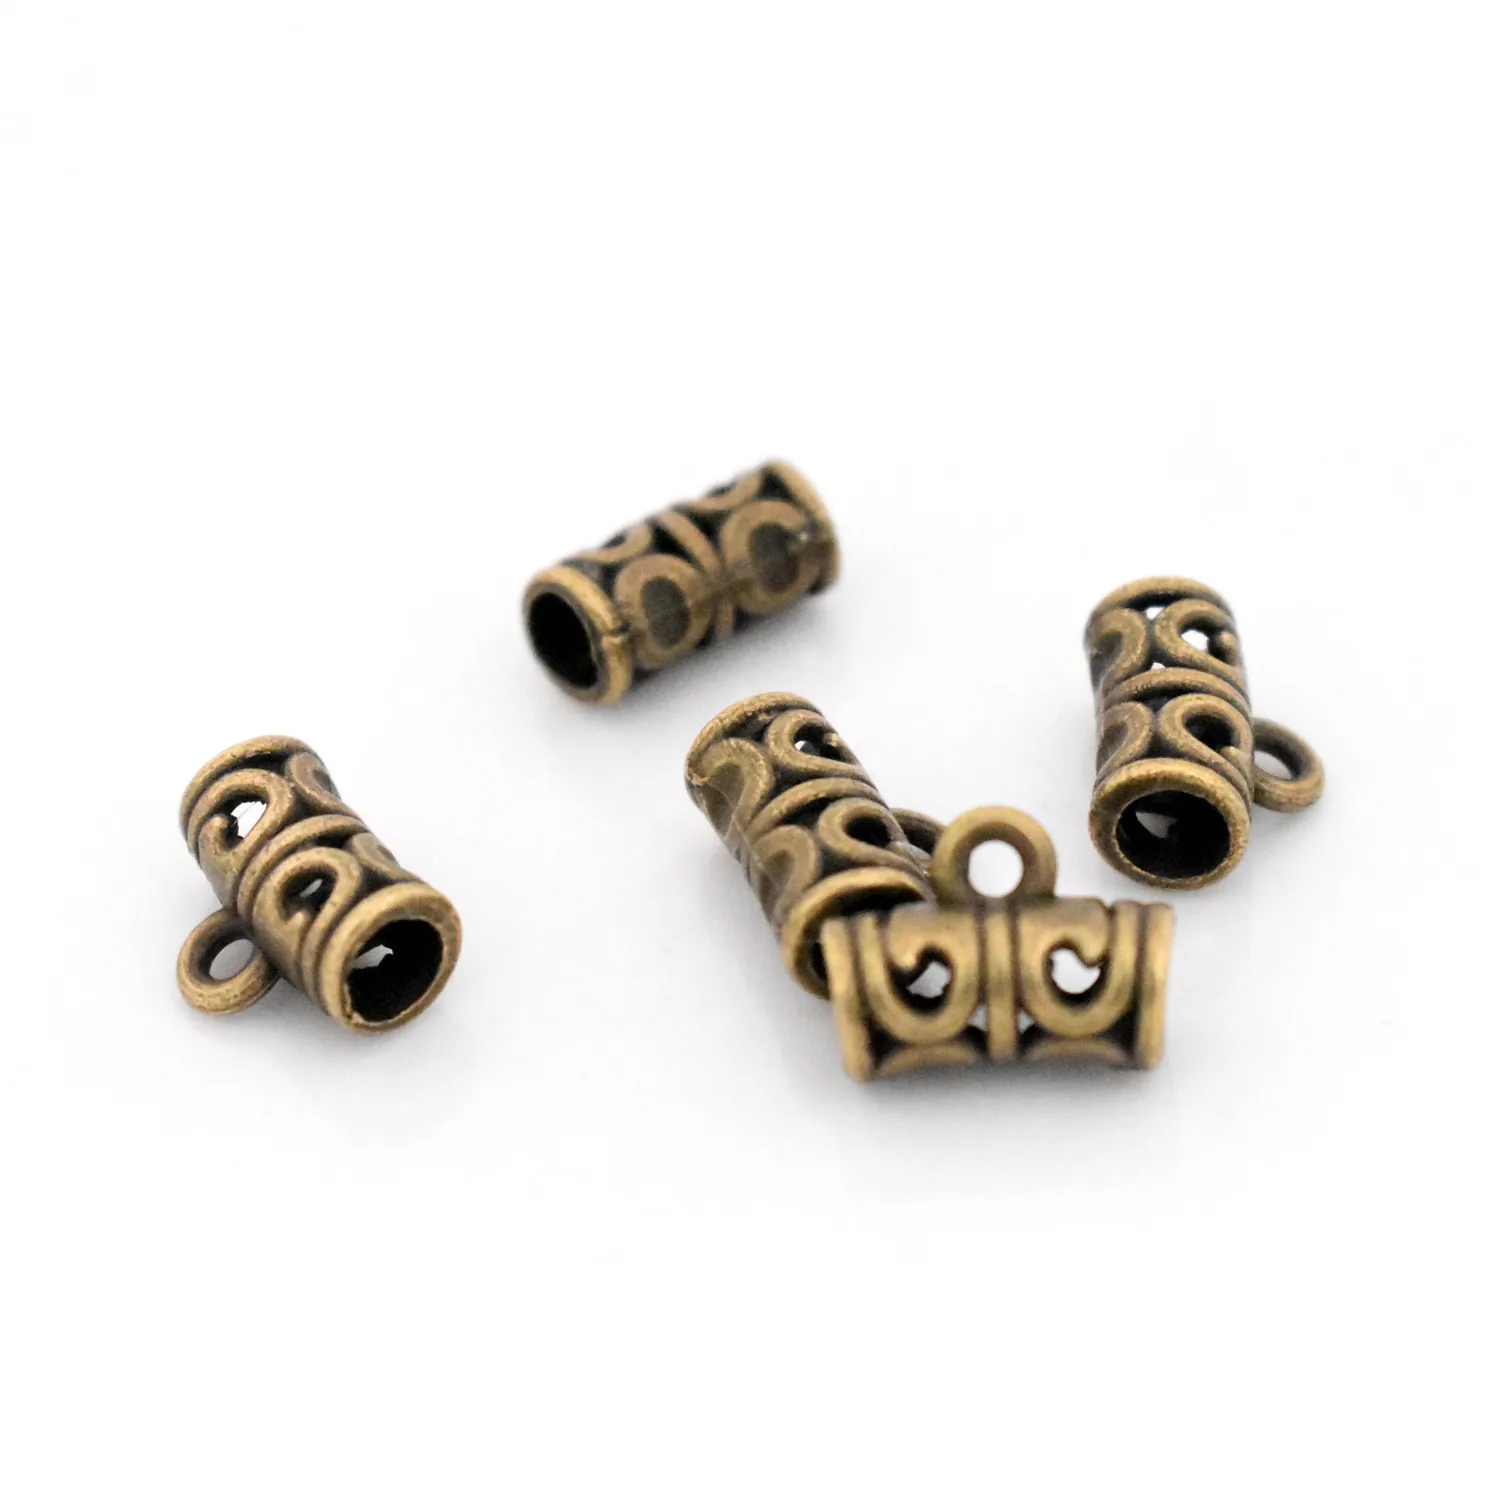 

12x9x5.5mm 30pcs/lot Antique Bronze Plated Charm Bail Beads Pendant Clip Clasp Connectors for Bracelet Necklace Jewelry Making